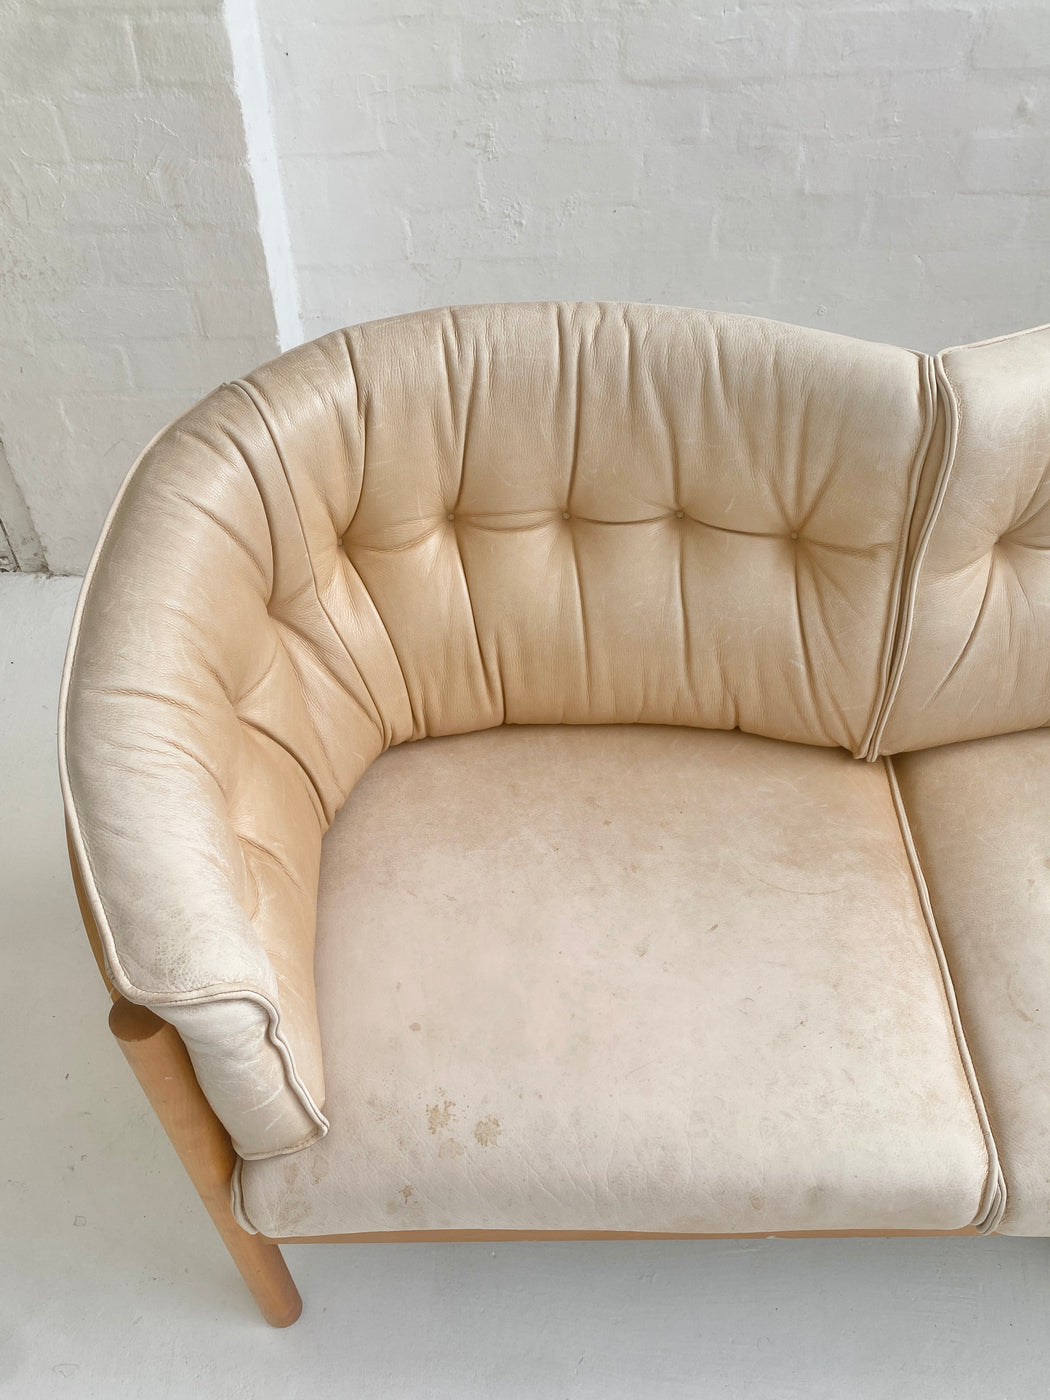 Nielaus Møbler Model 'N100' Leather Sofa